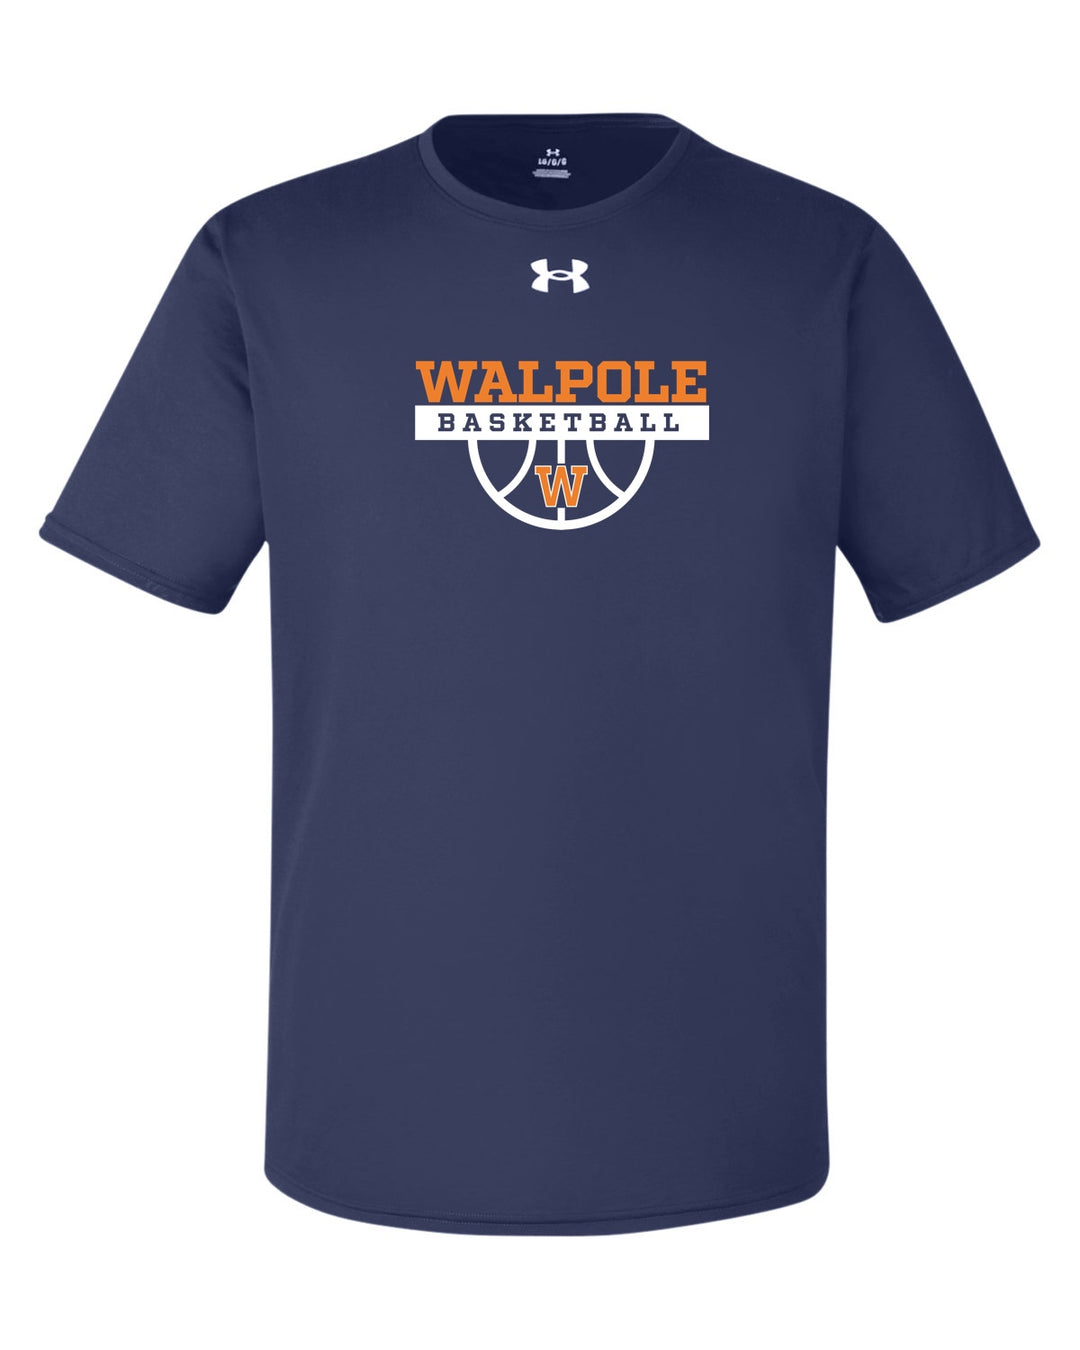 Walpole Youth Basketball - Under Armour Men's Team Tech T-Shirt (1376842)